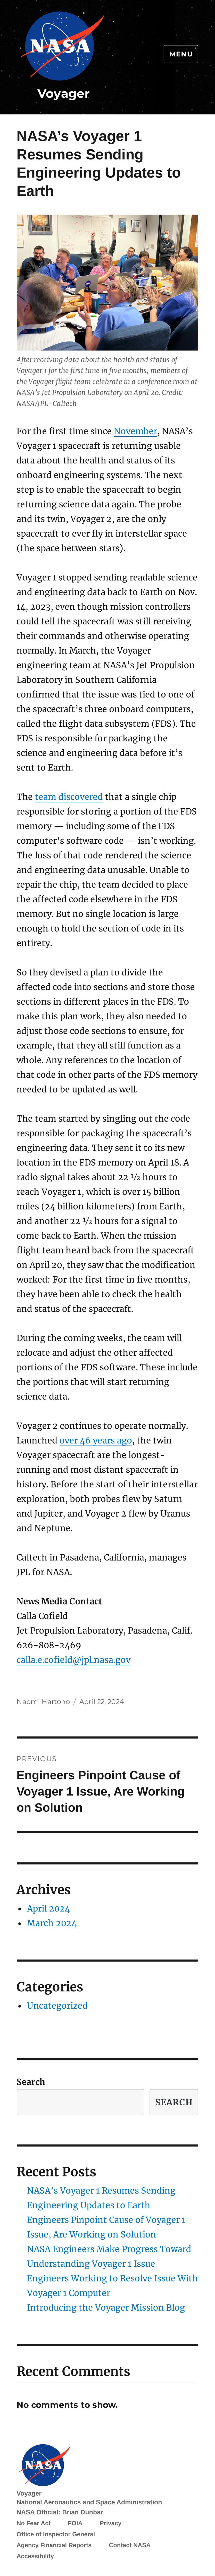 NASA's Voyager 1 Resumes Sending Engineering Updates to Earth